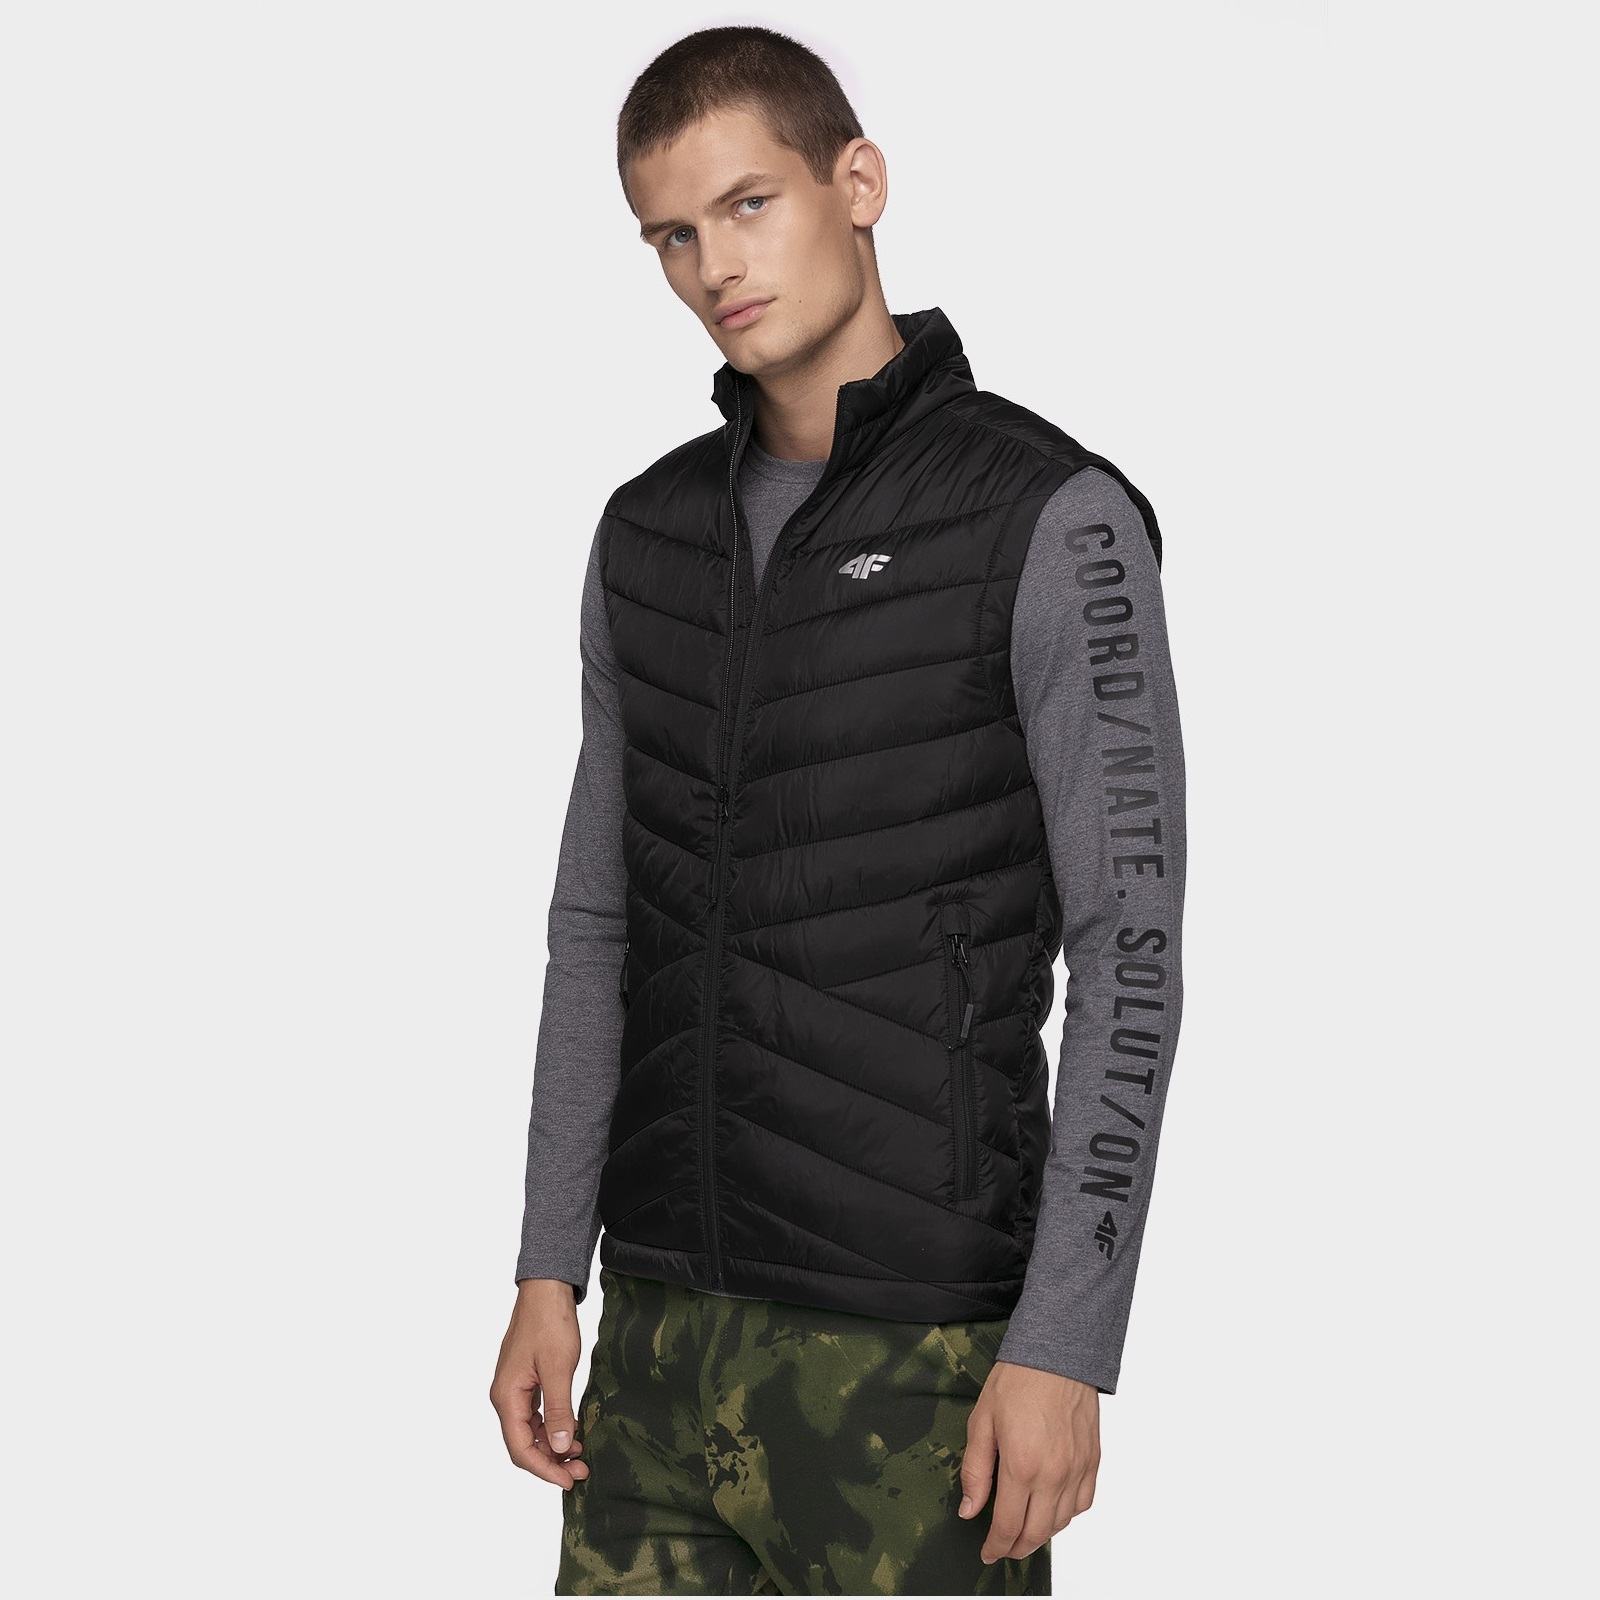 Jackets & Vests -  4f Men Synthetic Down Vest KUMP001